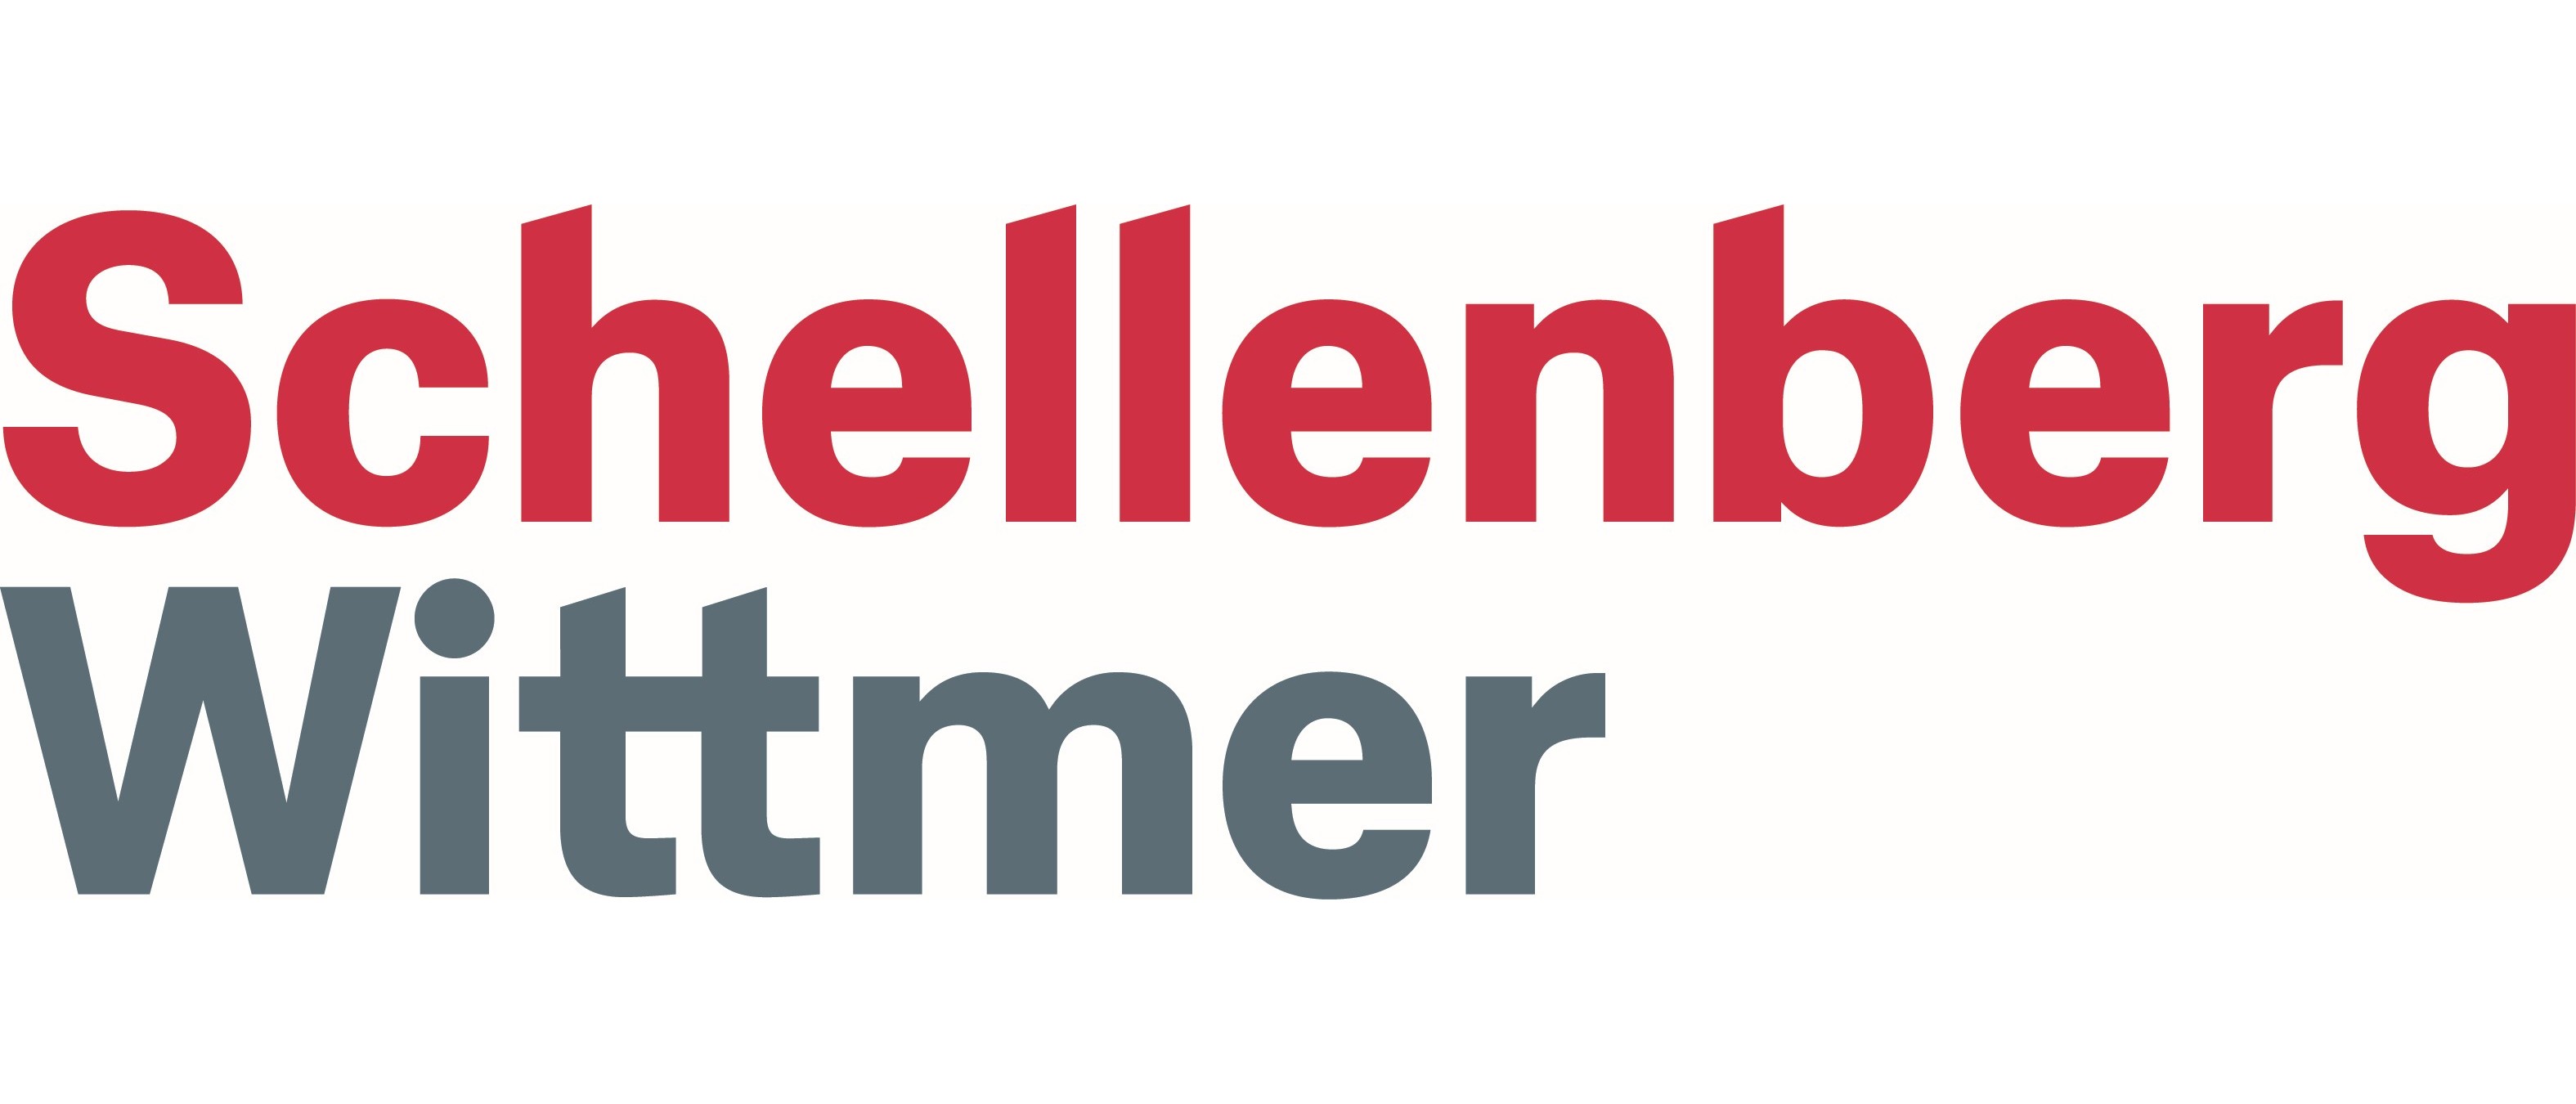 Schellenberg Wittmer Ltd